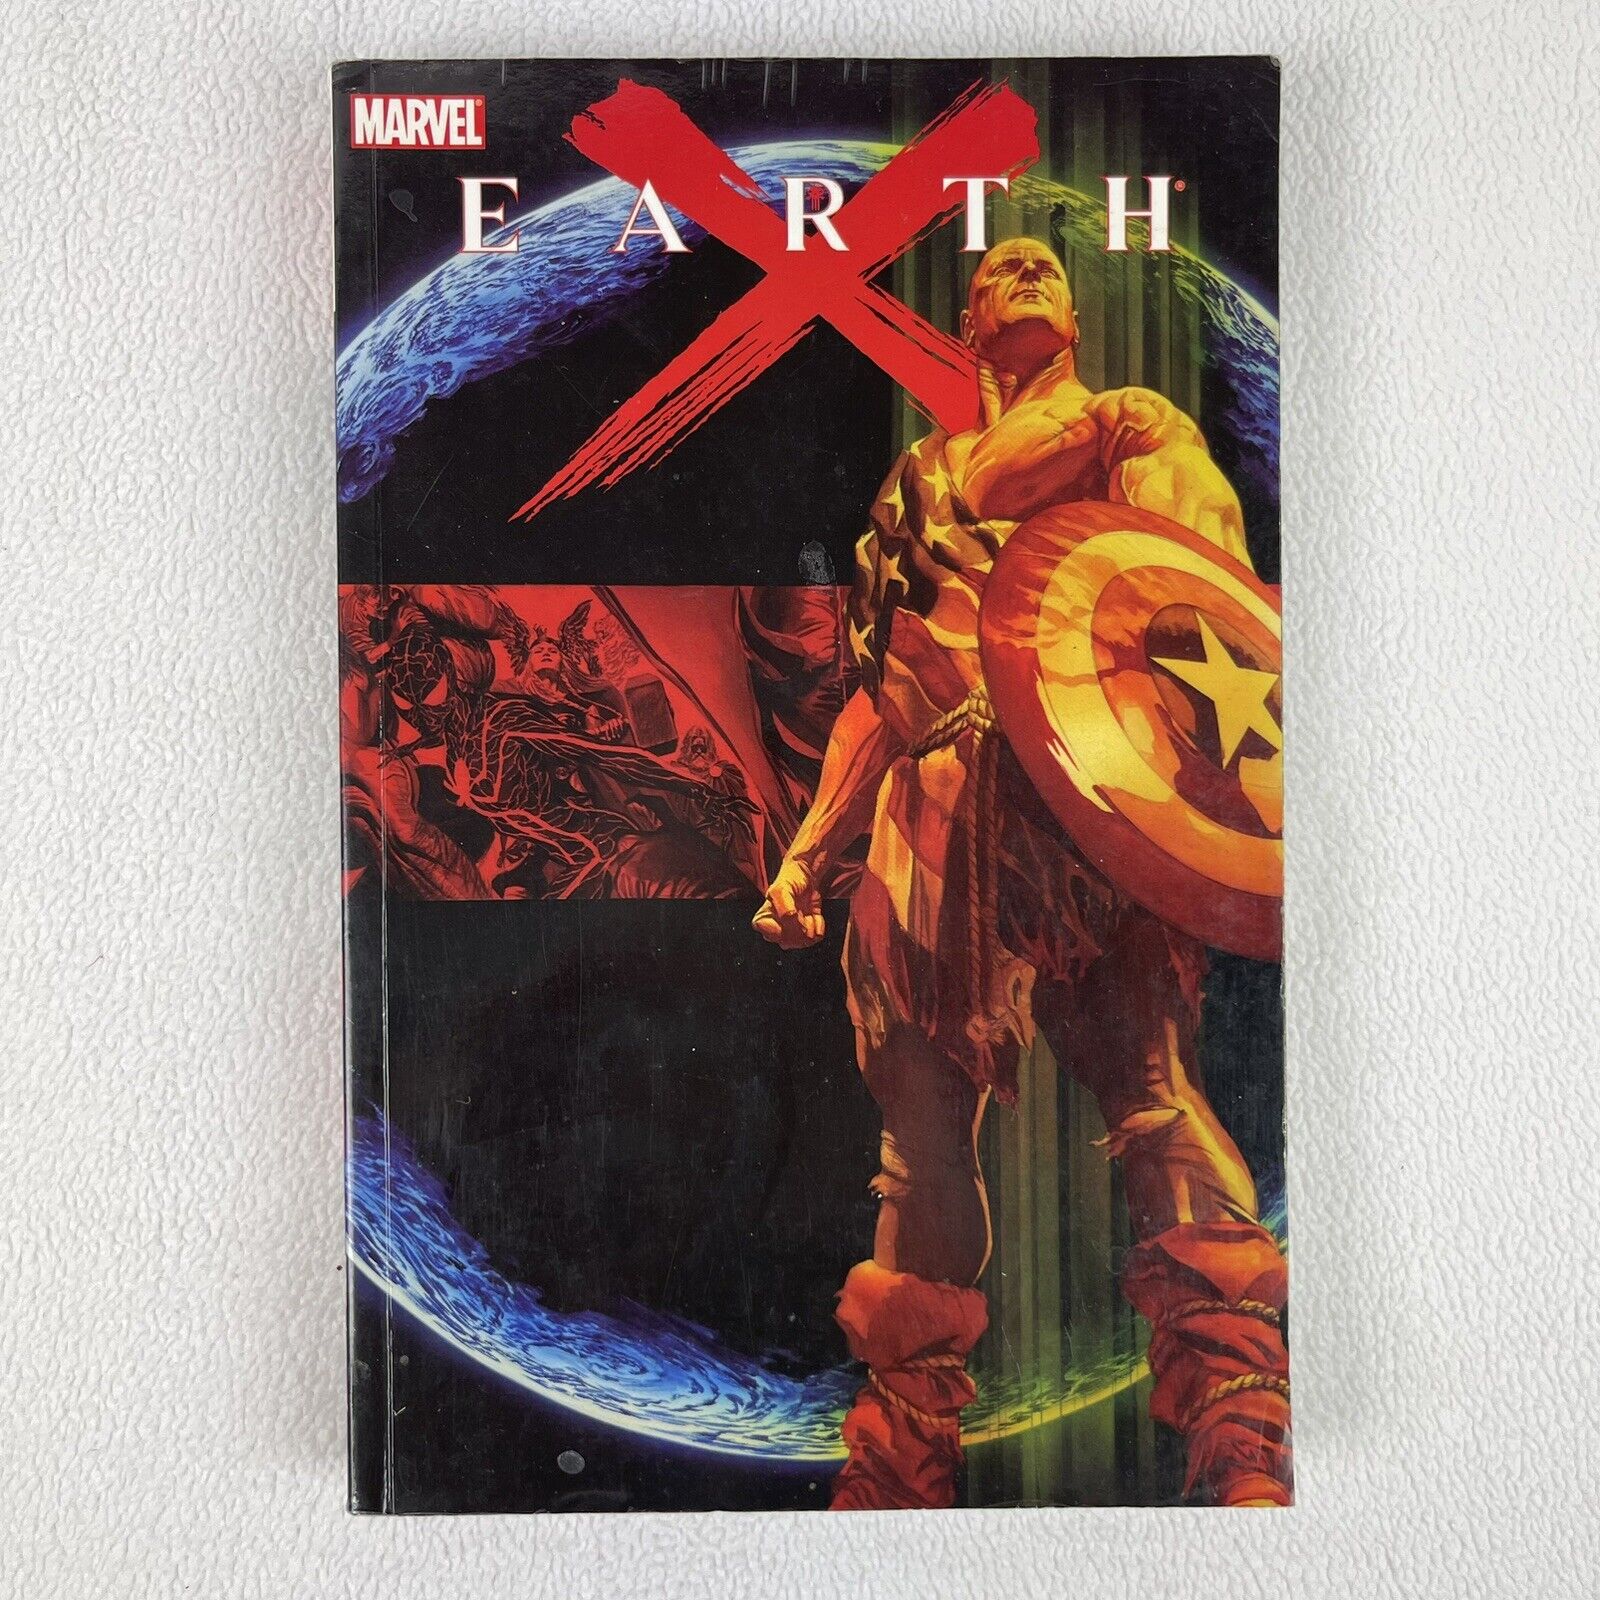 Earth X (2006, Marvel Comics) Trade Paperback